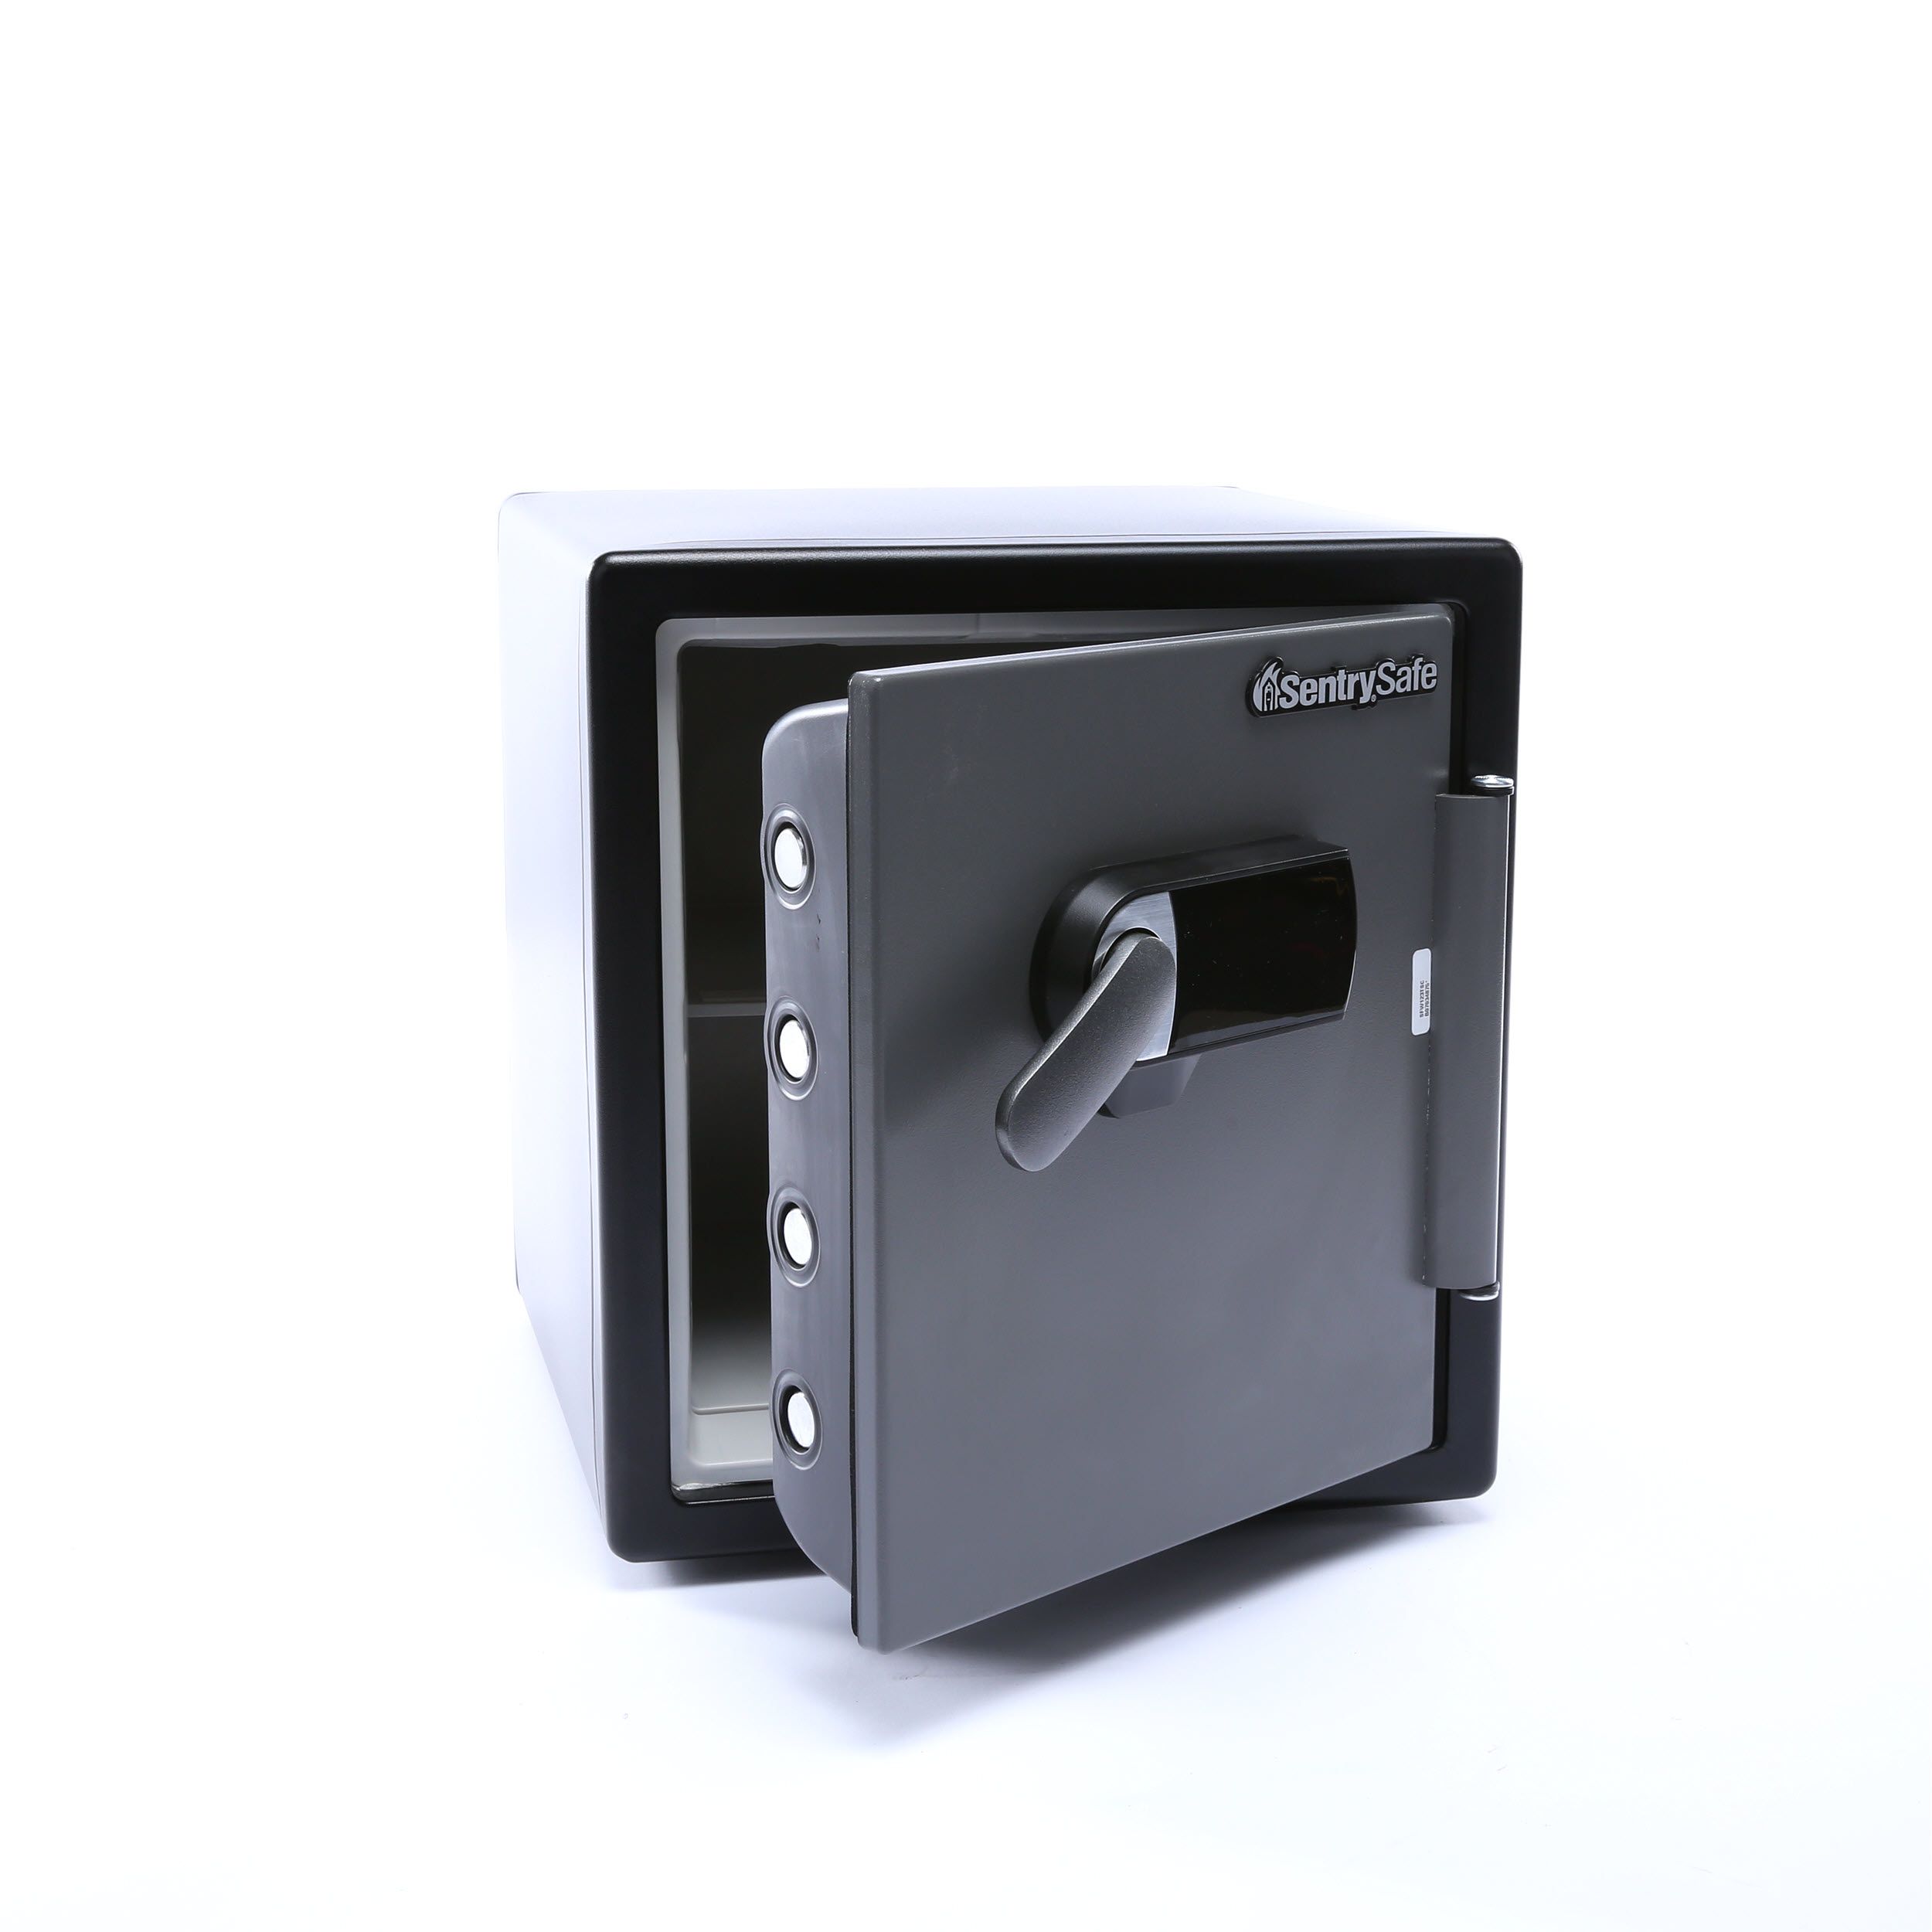 Large Touchscreen Lock Alarm SentrySafe Flood Box Water Safe 1.23 cu Fire ft 